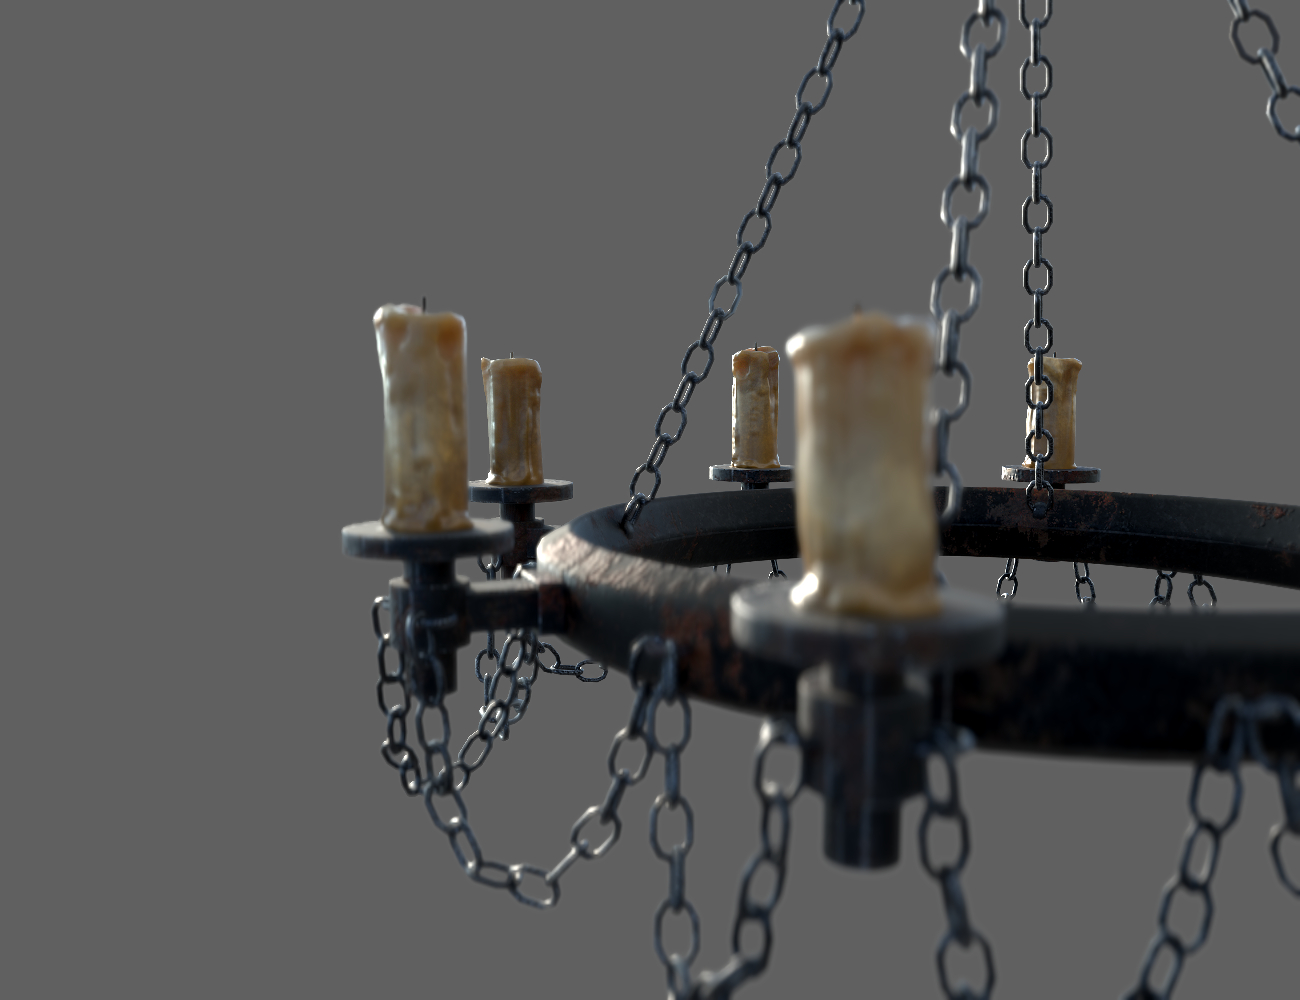 Pirate Props for Genesis 8.1 by: ThreeDigital, 3D Models by Daz 3D